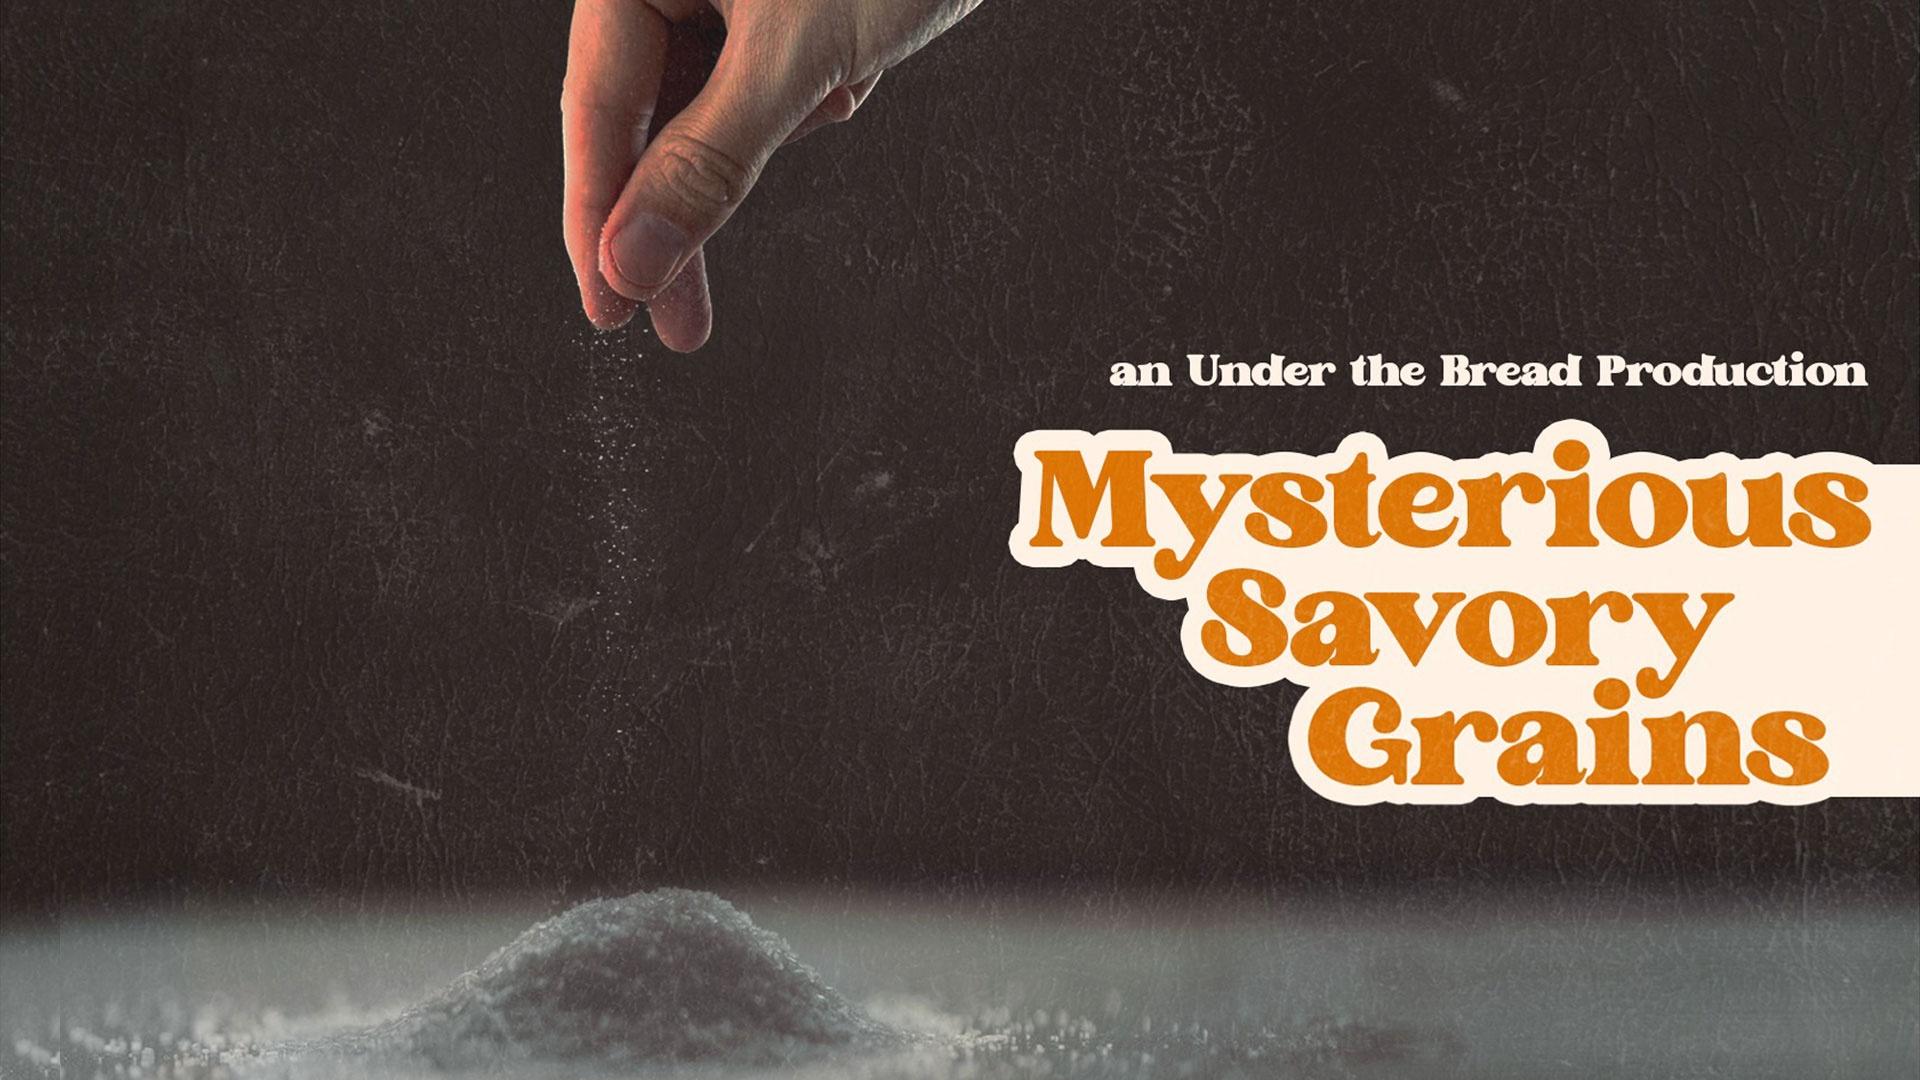 MSG: Mysterious Savory Grains